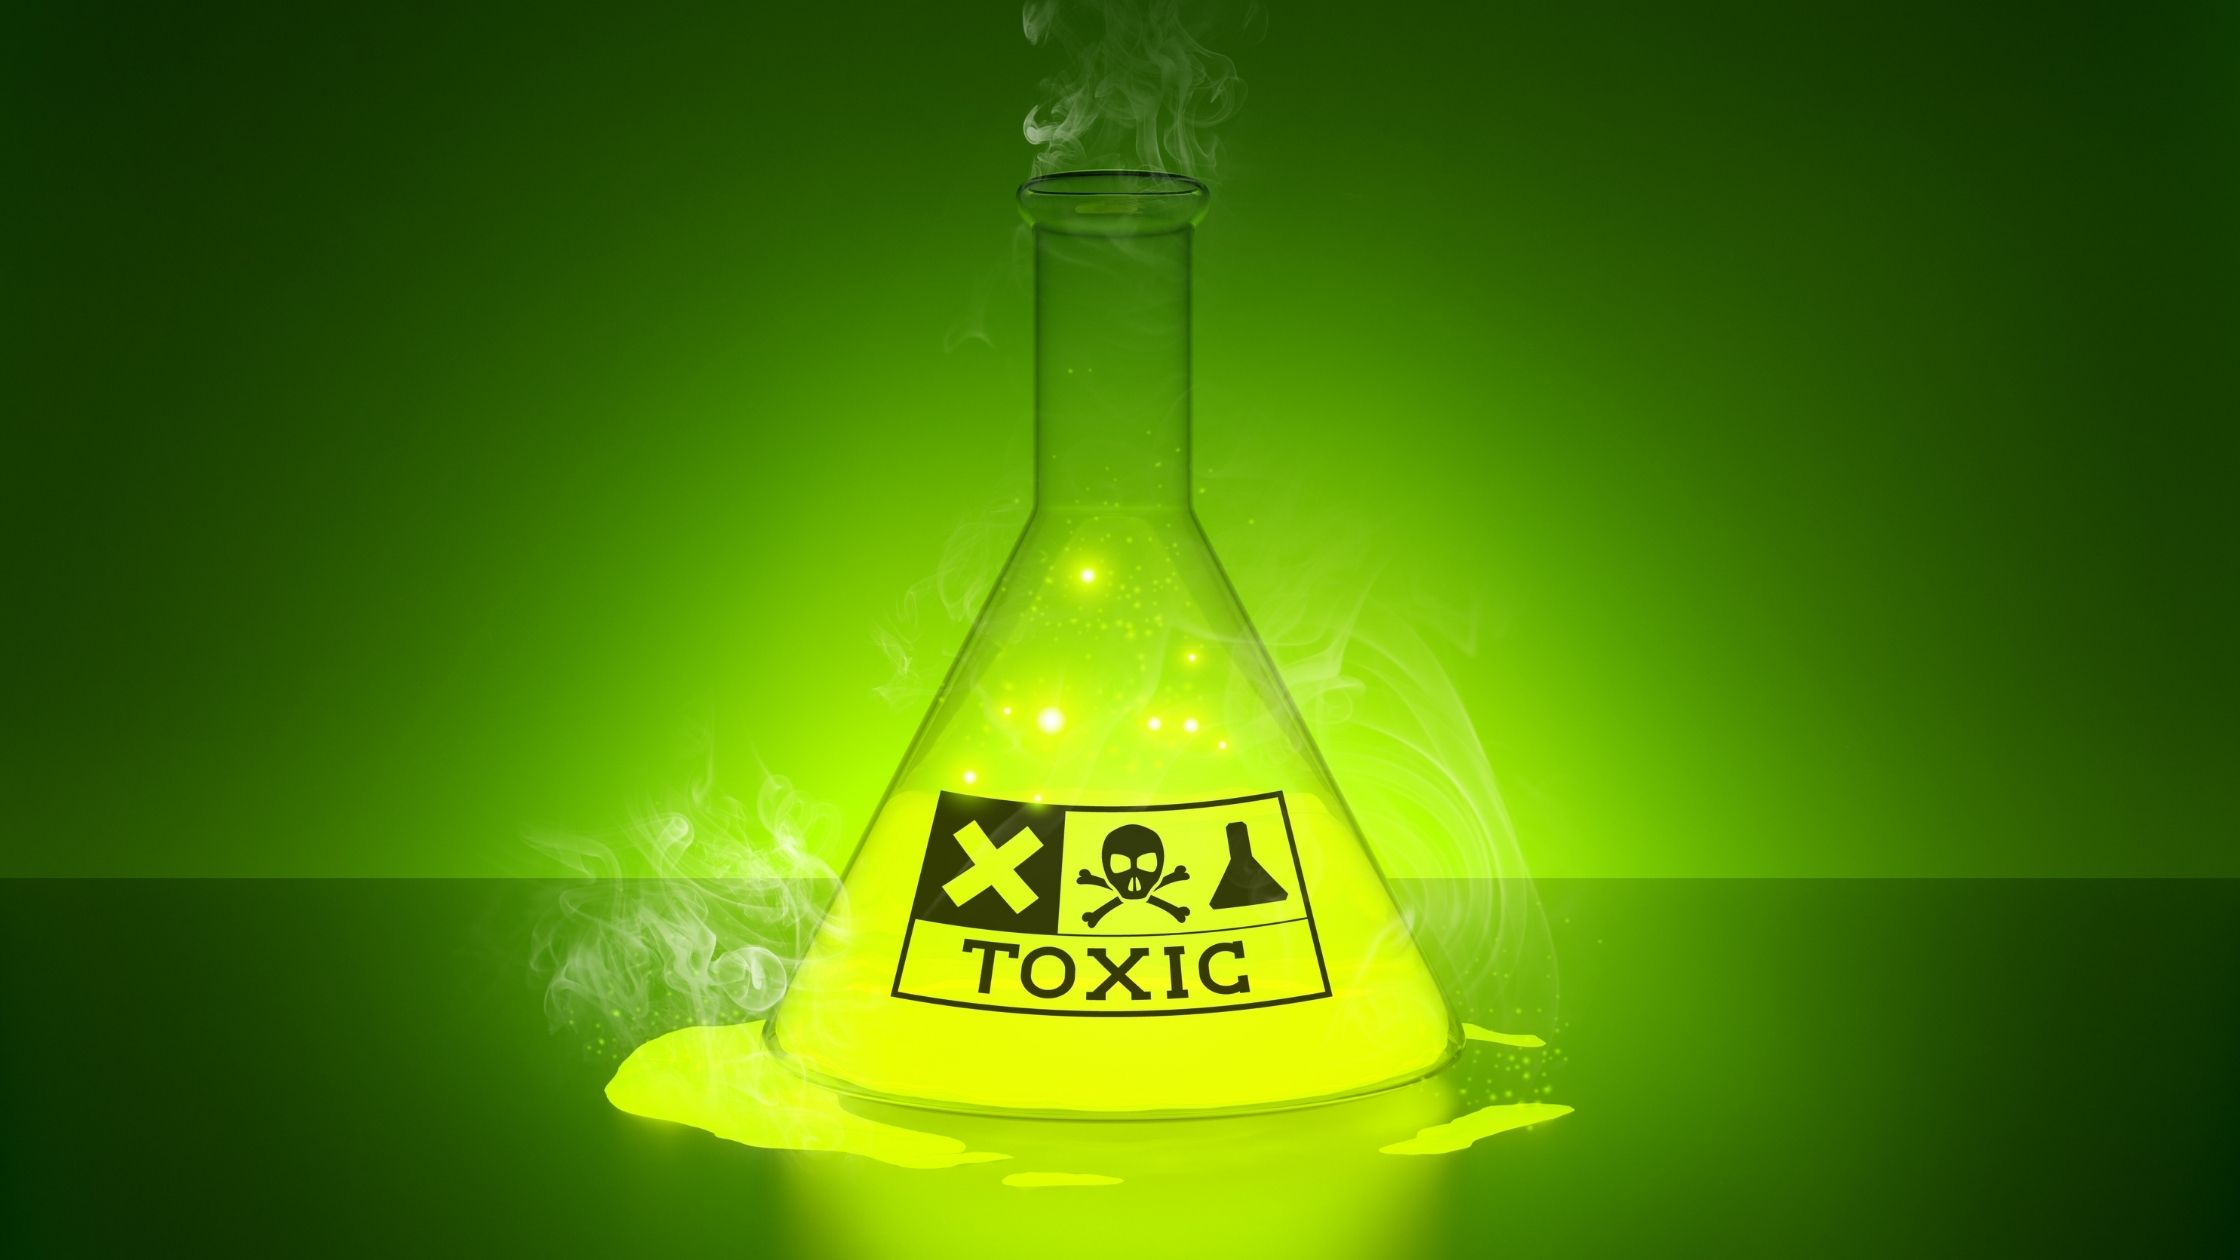 a toxic and dangerous acid